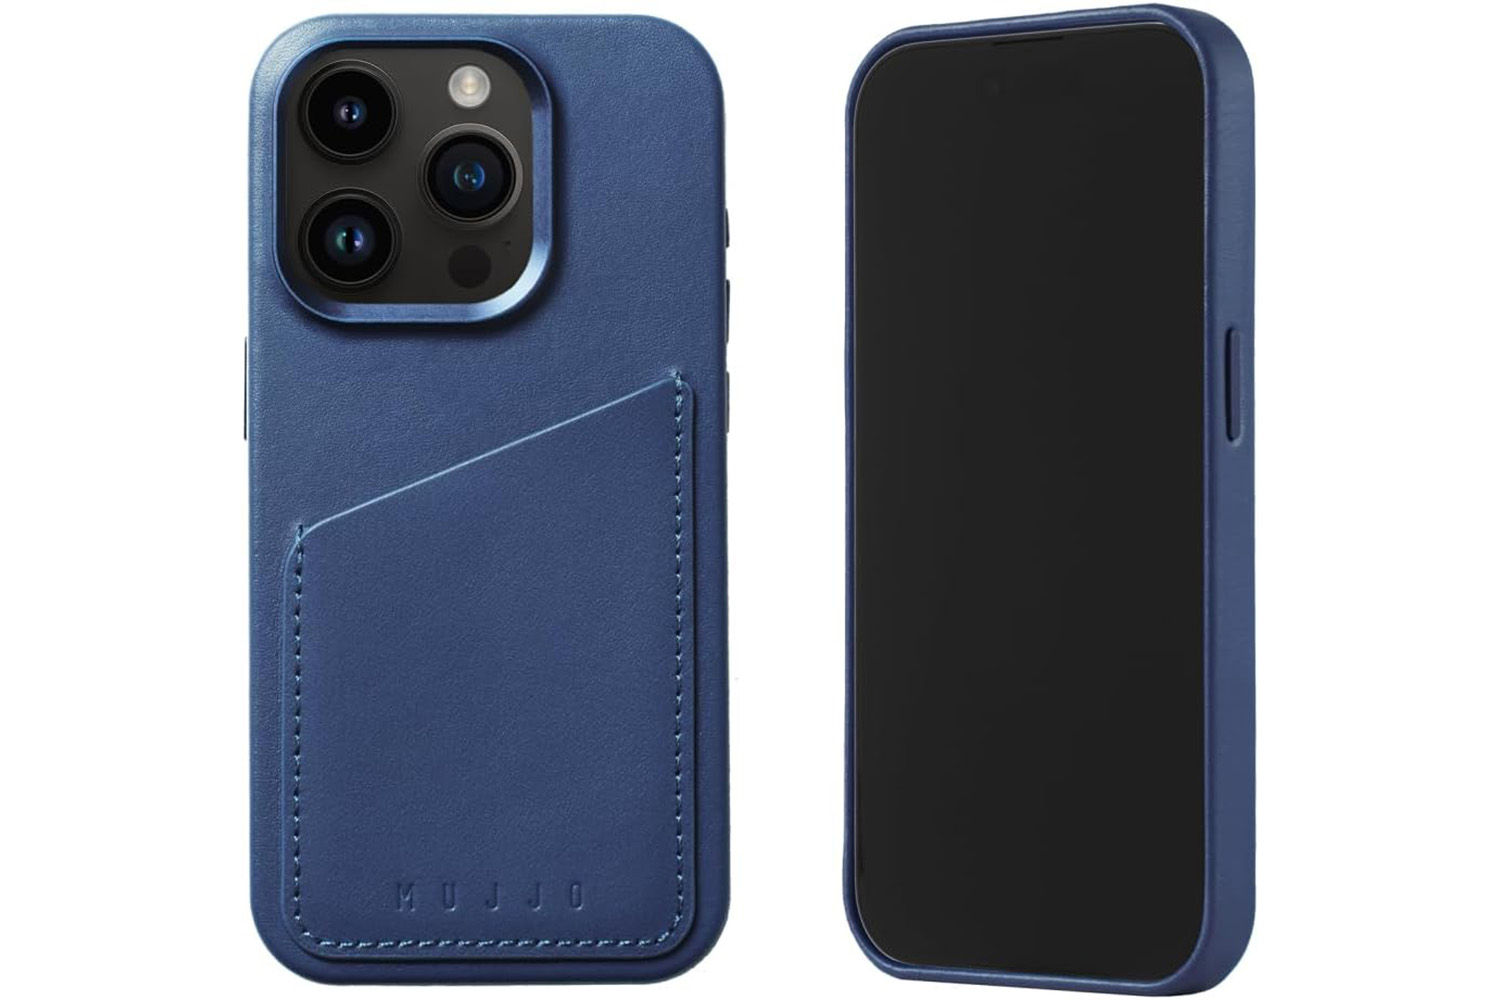 Mujjo iPhone 15 Pro Max case in blue.